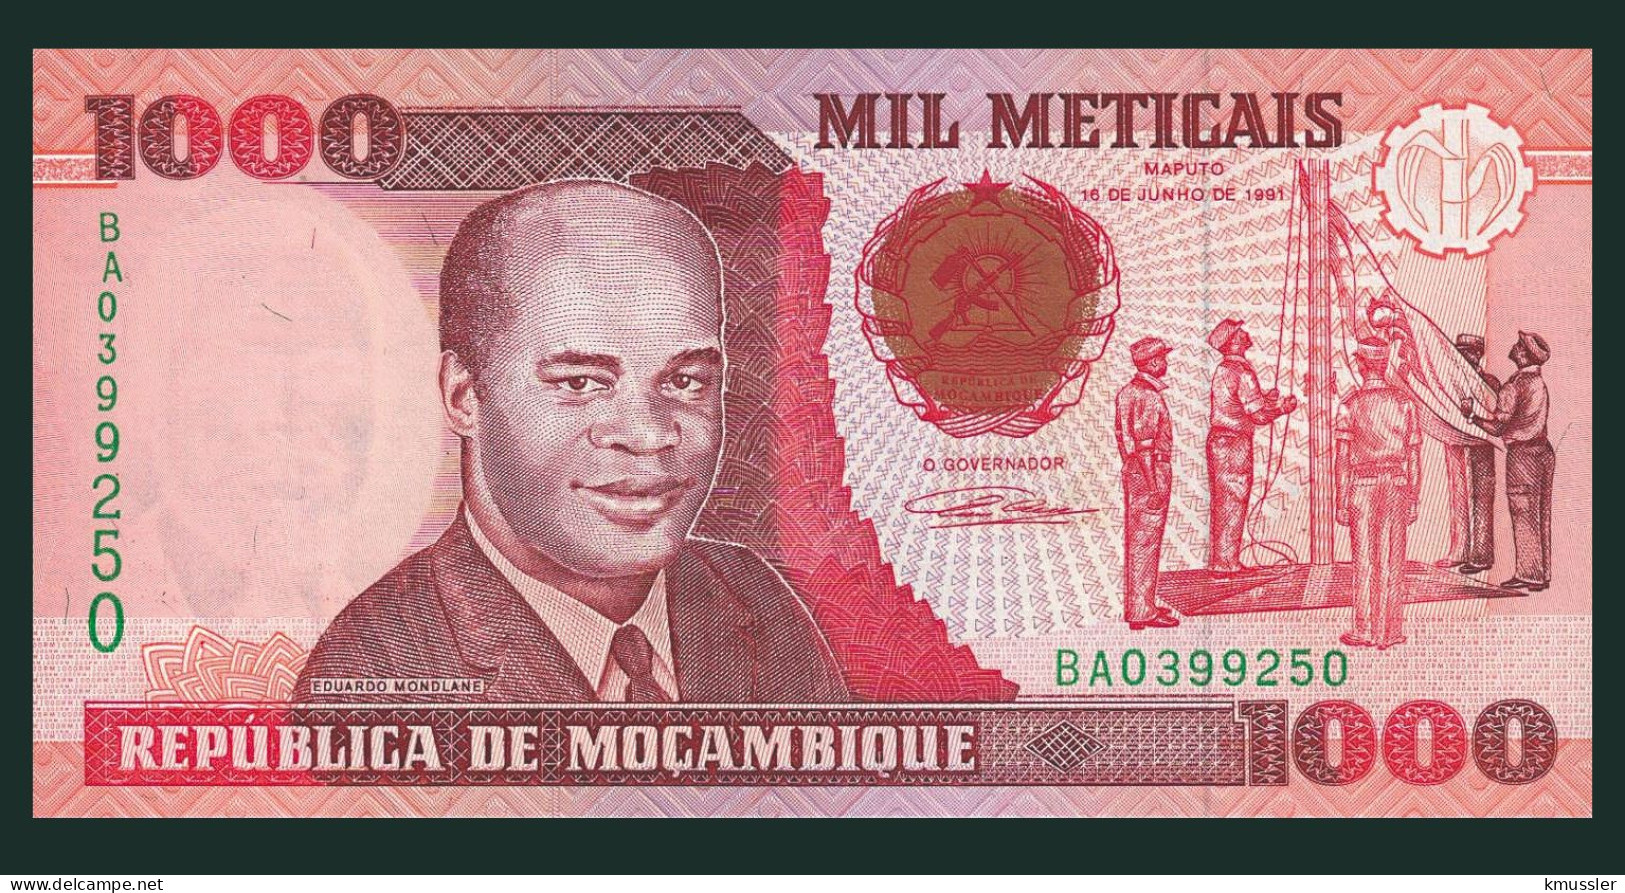 # # # Banknote Mosambik (Mozambique) 1.000 Meticais 1991 (P-135) UNC # # # - Mozambico